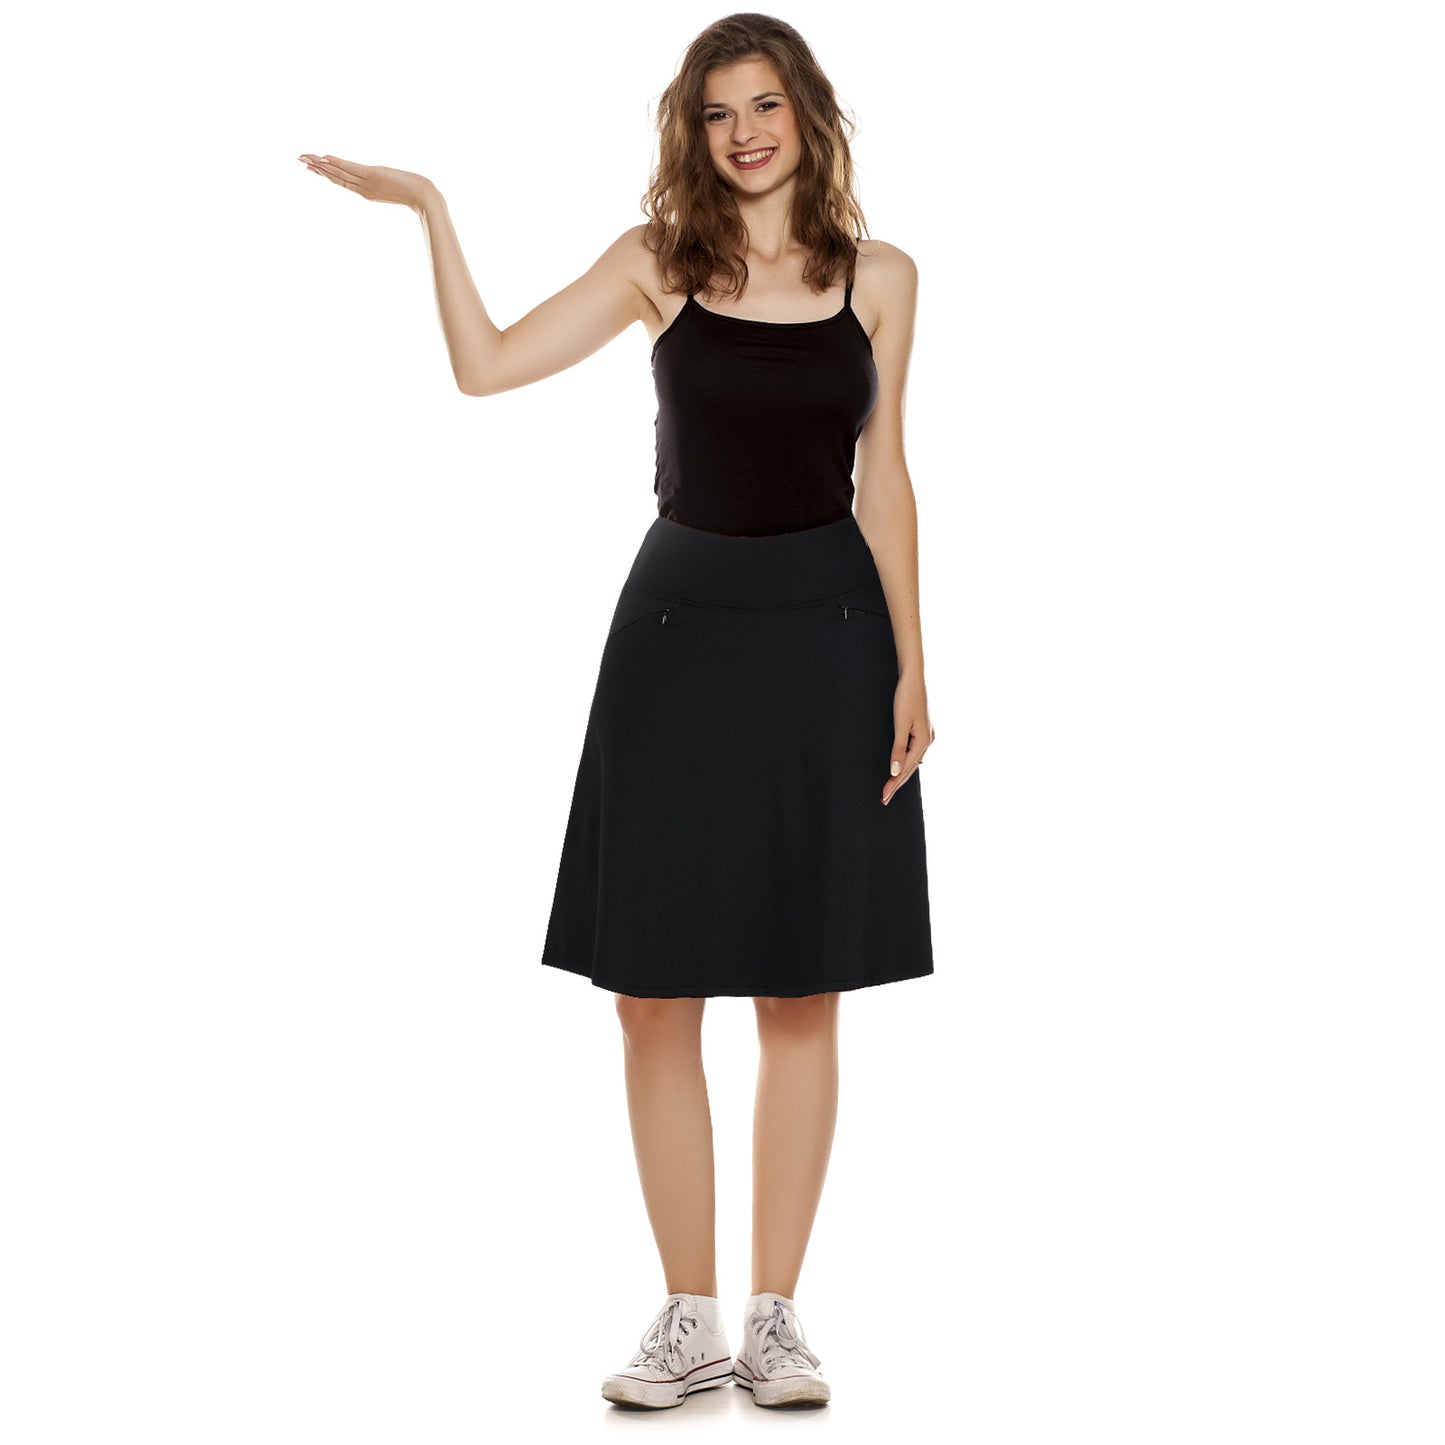 ANIVIVO Women's 21 Knee Length Skorts Skirts Golf Athletic Casual Skort  with Zipper Pockets High Waist